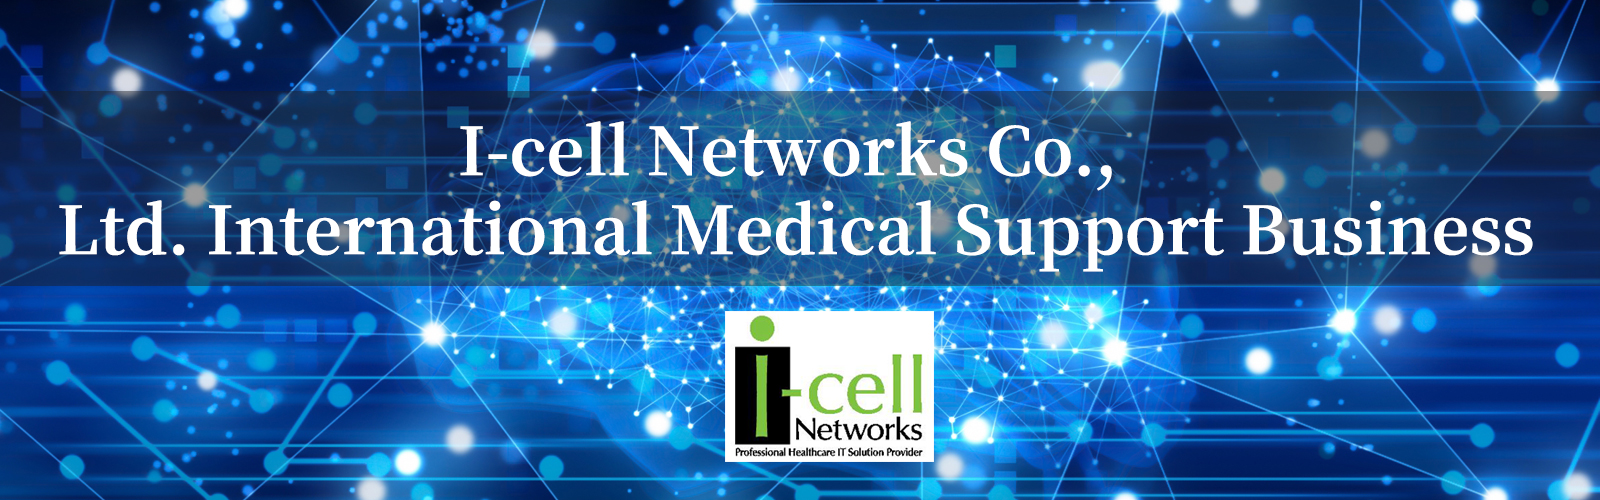 I-cell Networks Co., Ltd.International Medical Support Business